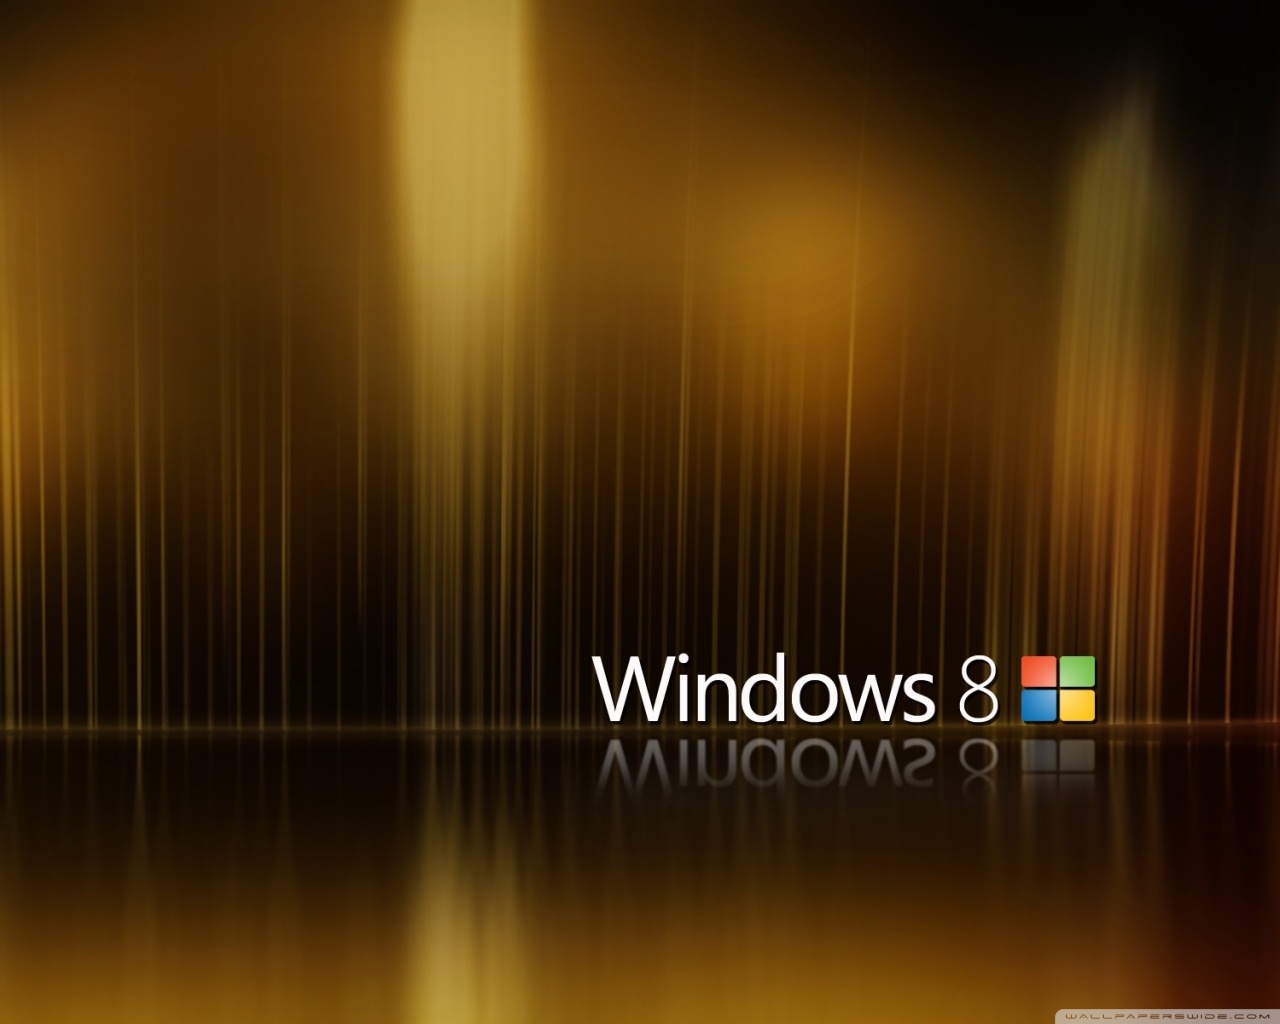 Windows 8 HD desktop wallpaper High Definition Fullscreen Mobile